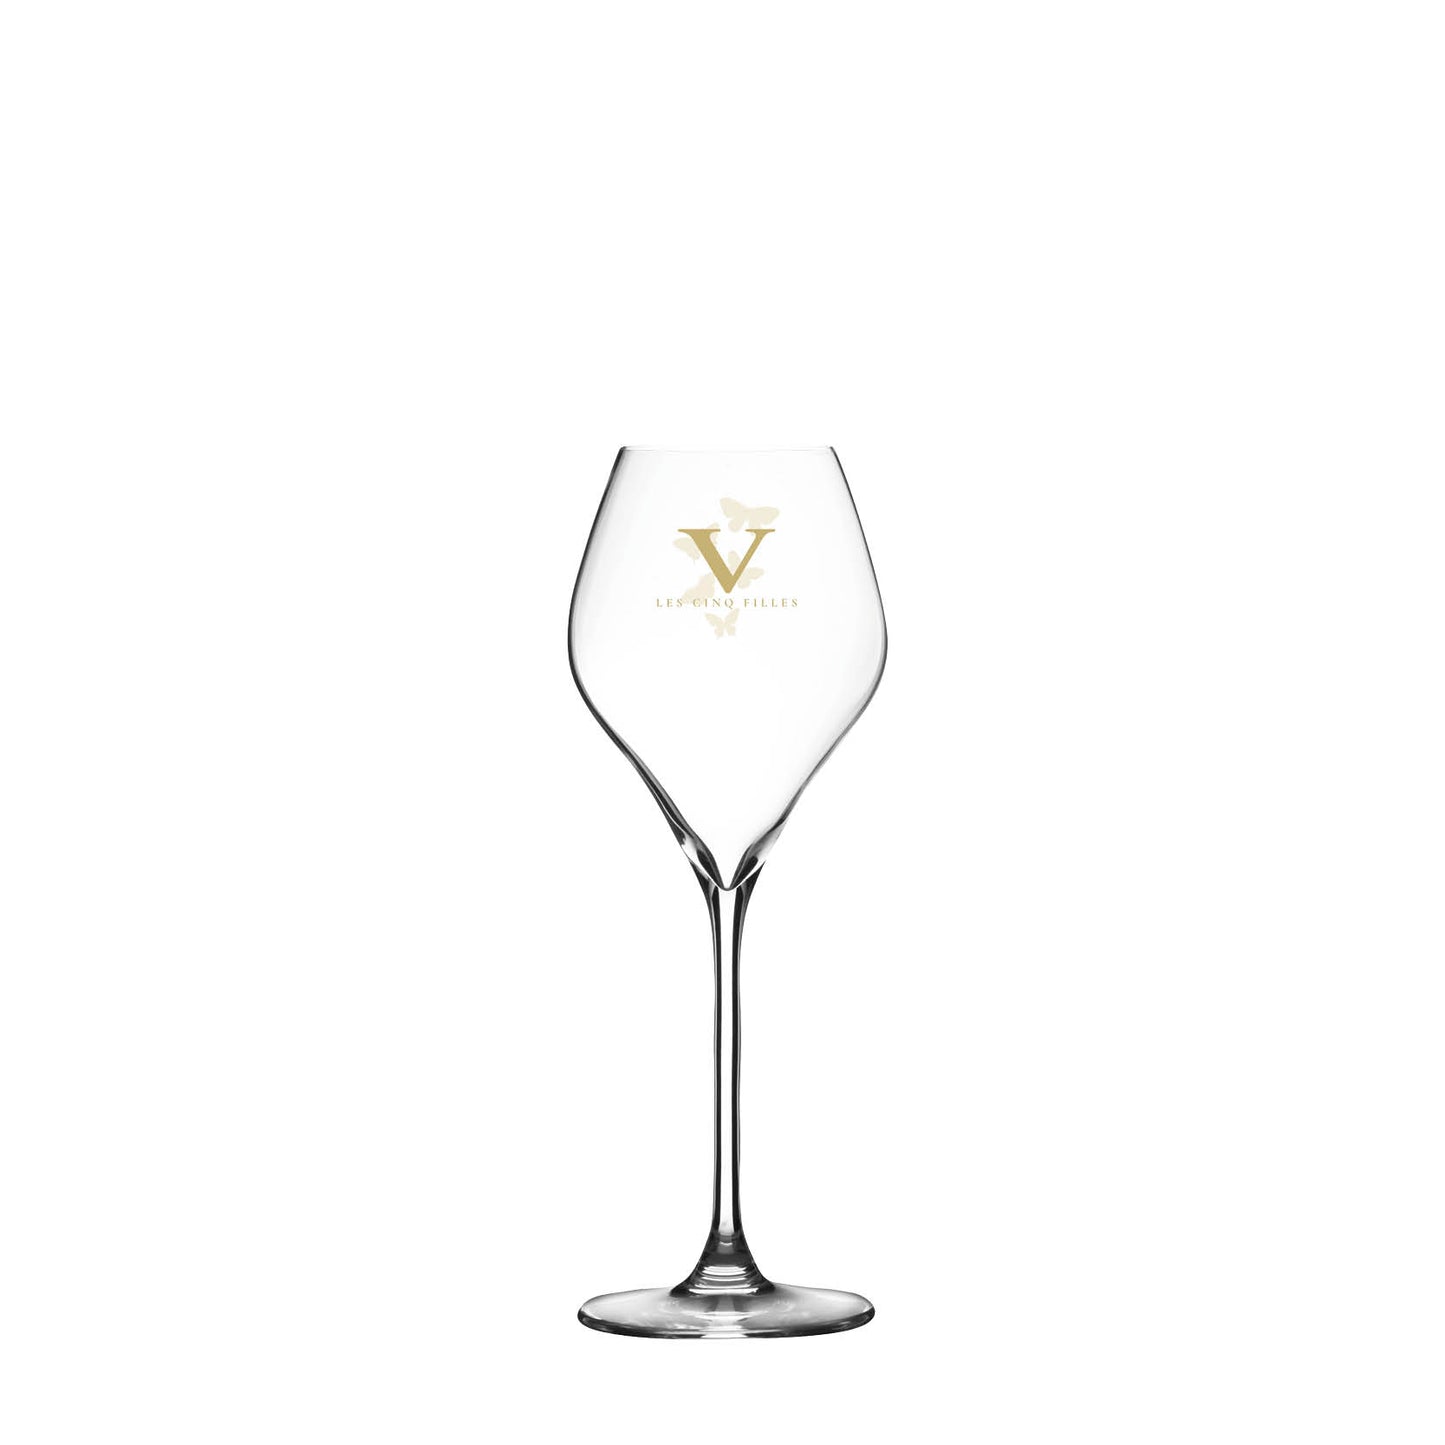 Cinq all Les YSC Filles Champagne –